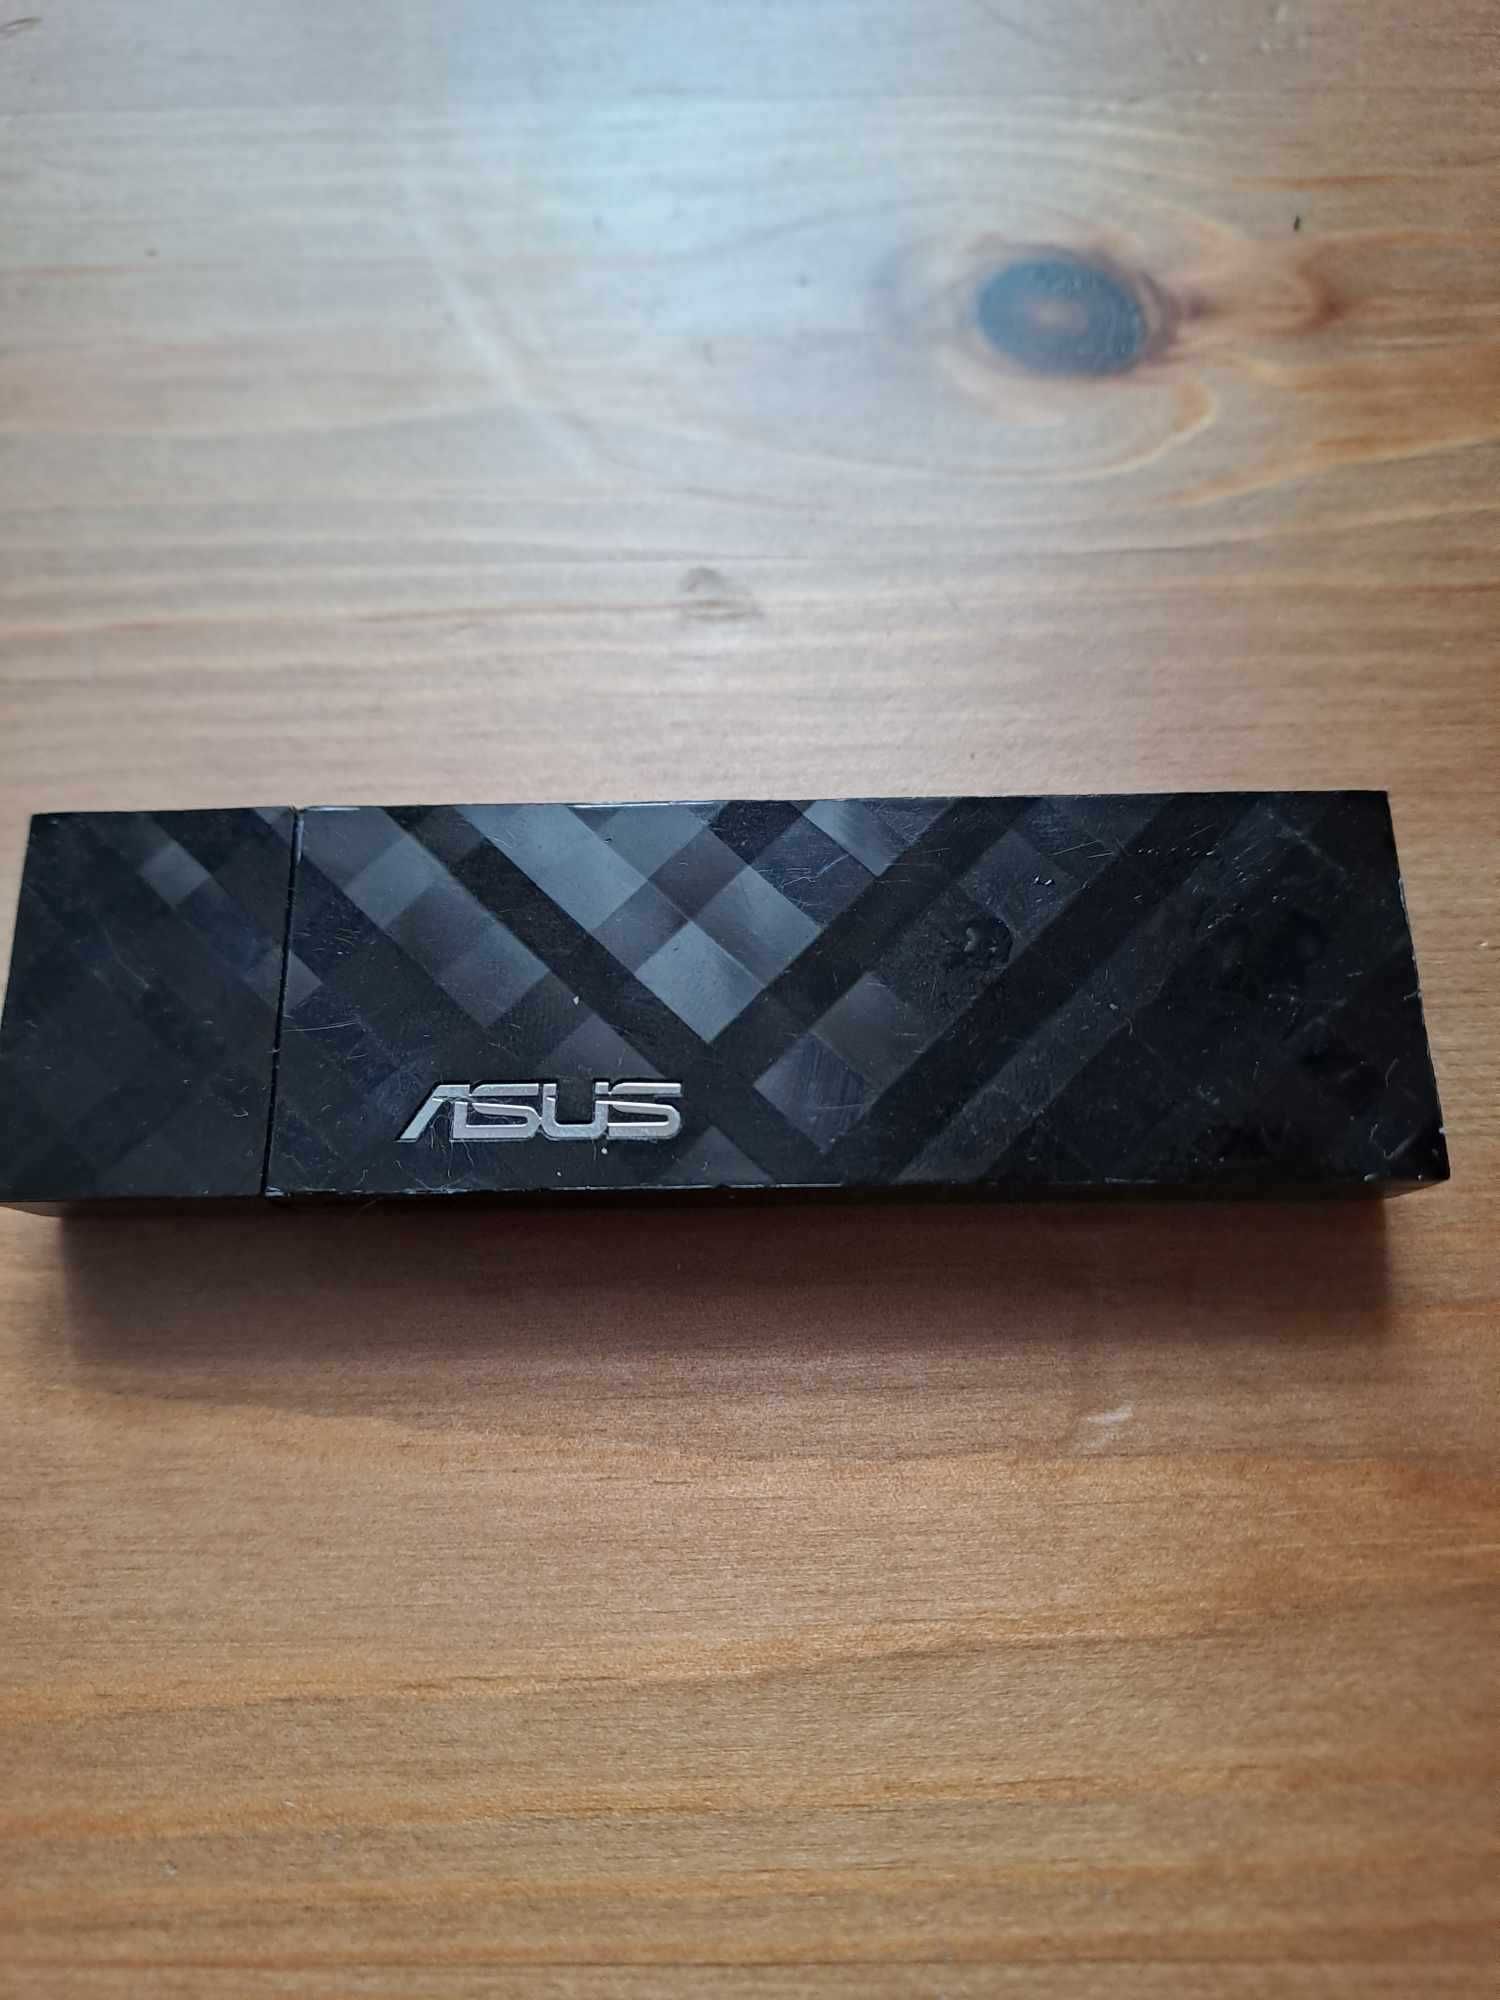 ASUS USB N53 Adapter Dual Band Wireless N600